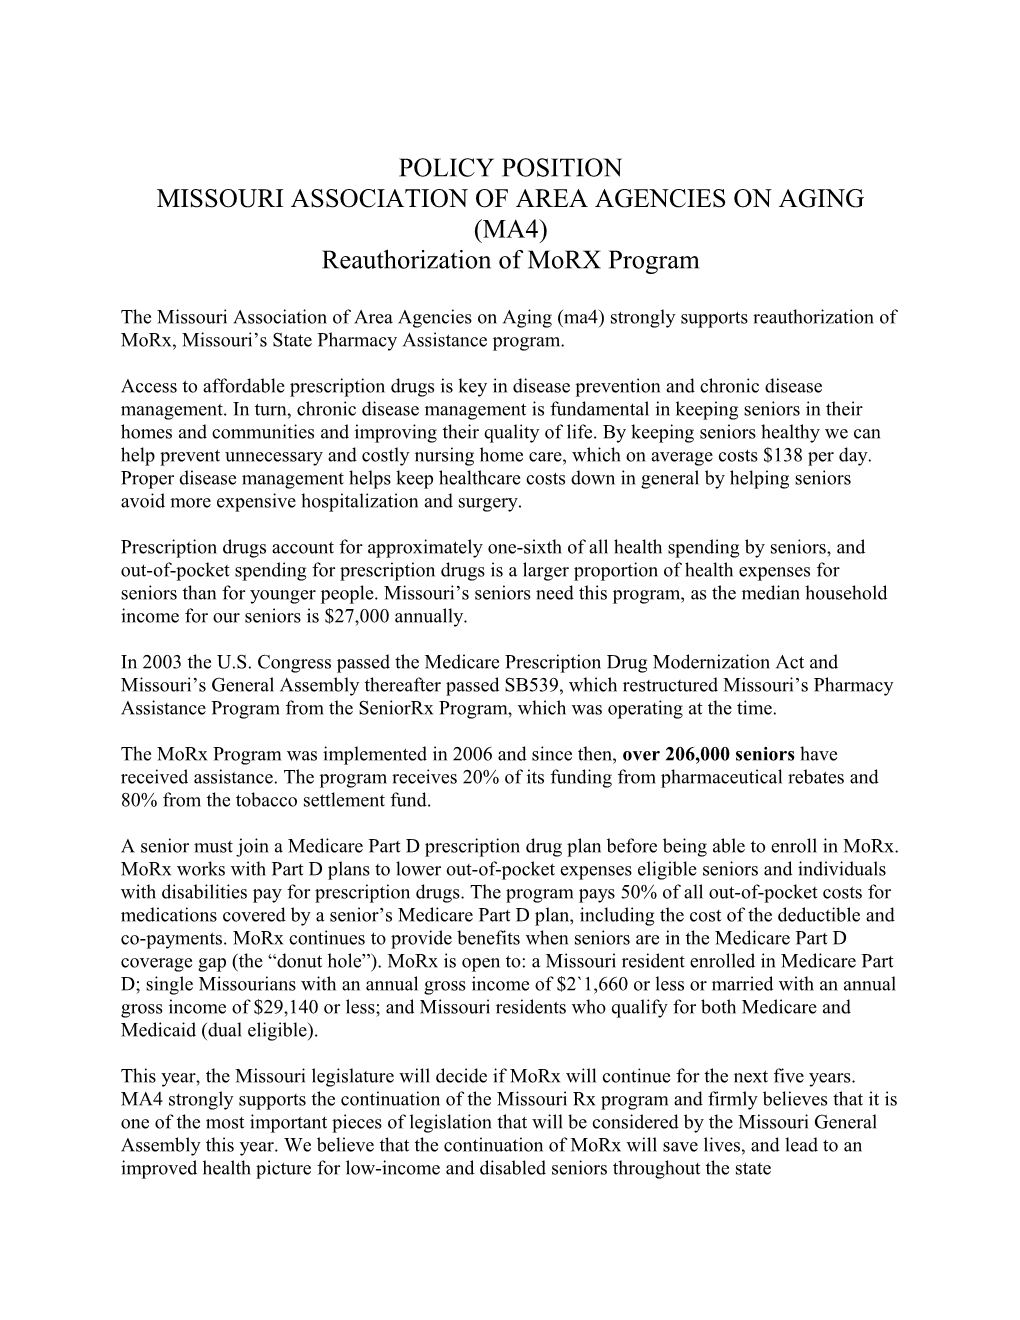 Missouri Association of Area Agencies on Aging (Ma4)